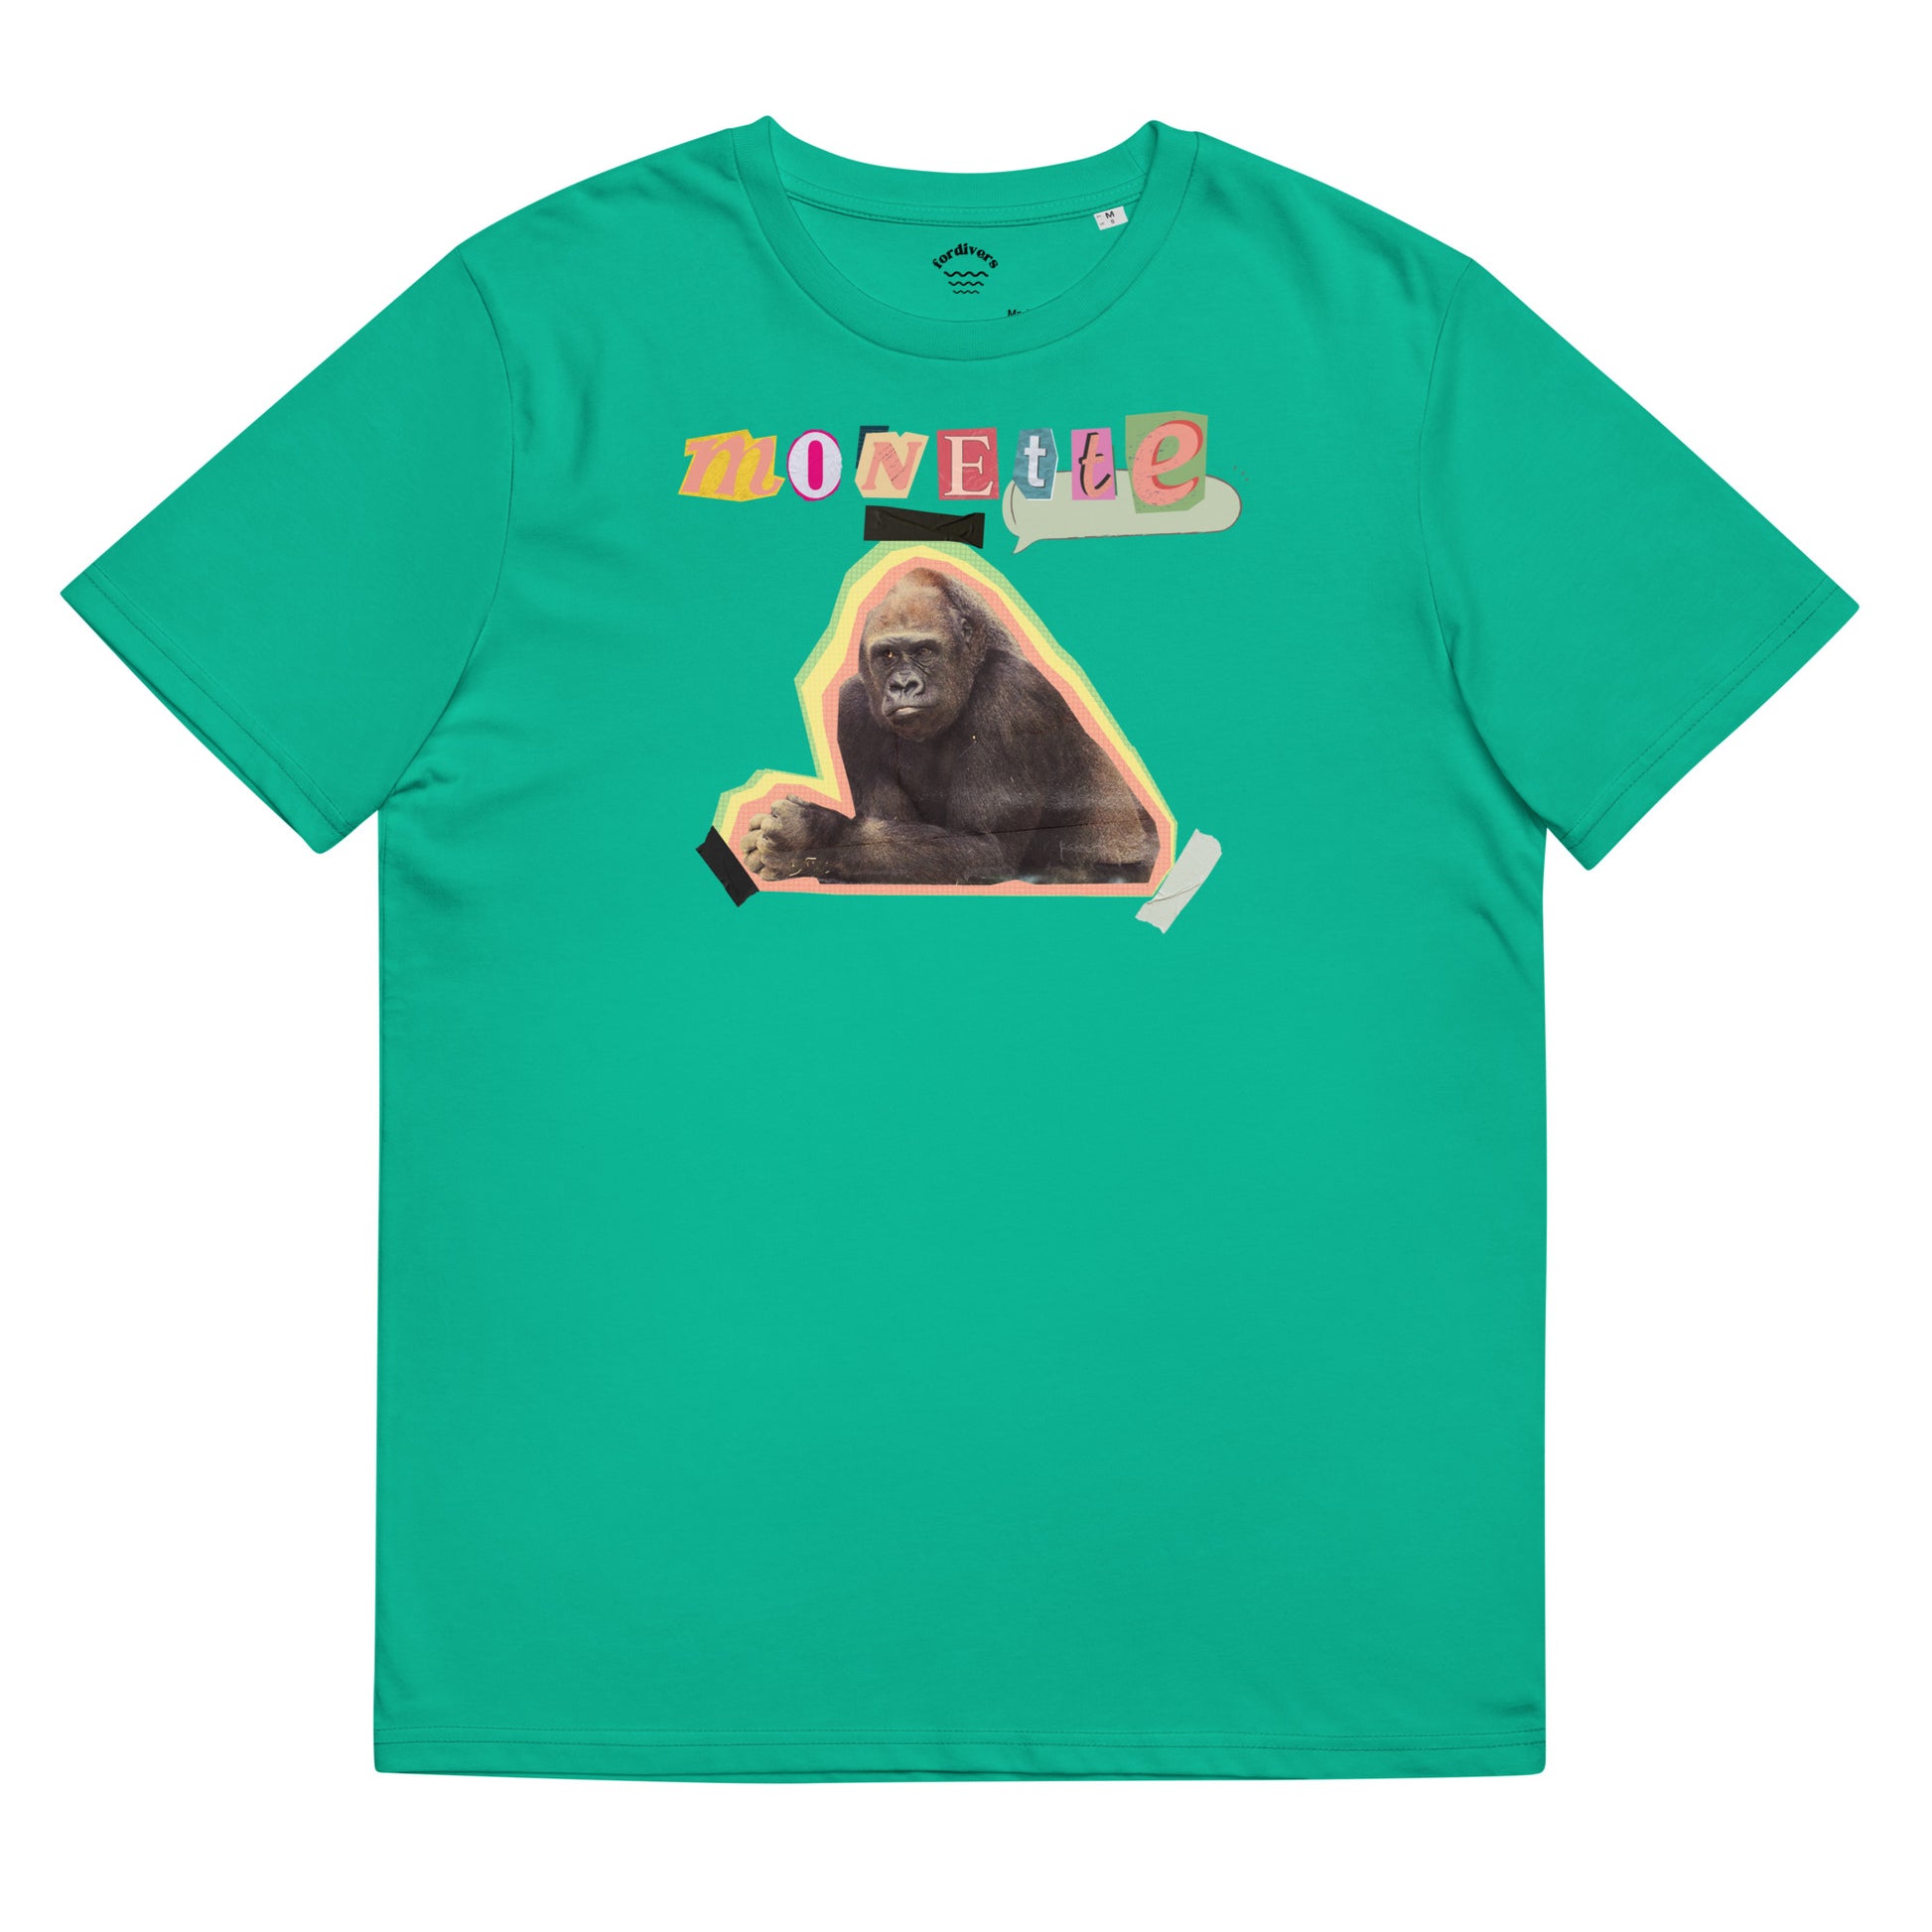 Camiseta gorila monette